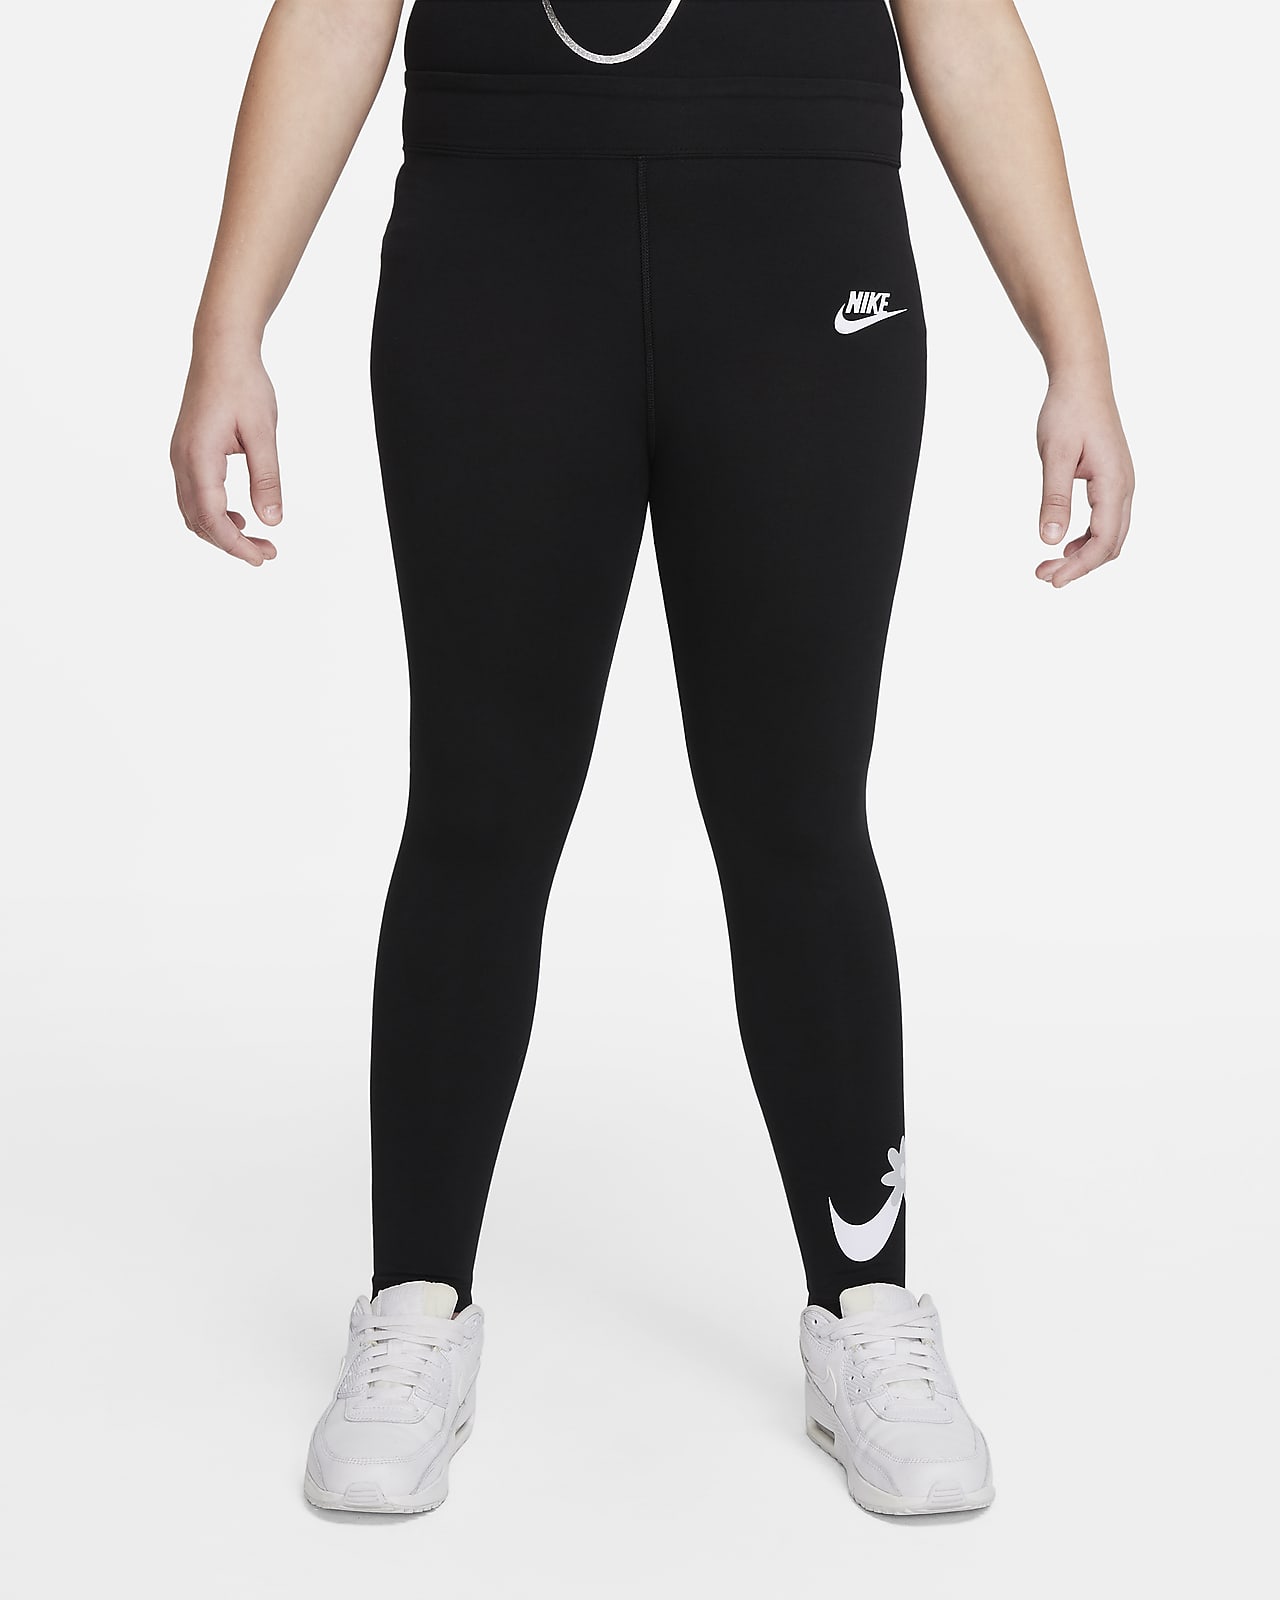 Leggings Nike Sportswear Essential för ungdom (tjejer) (utökad storlek)